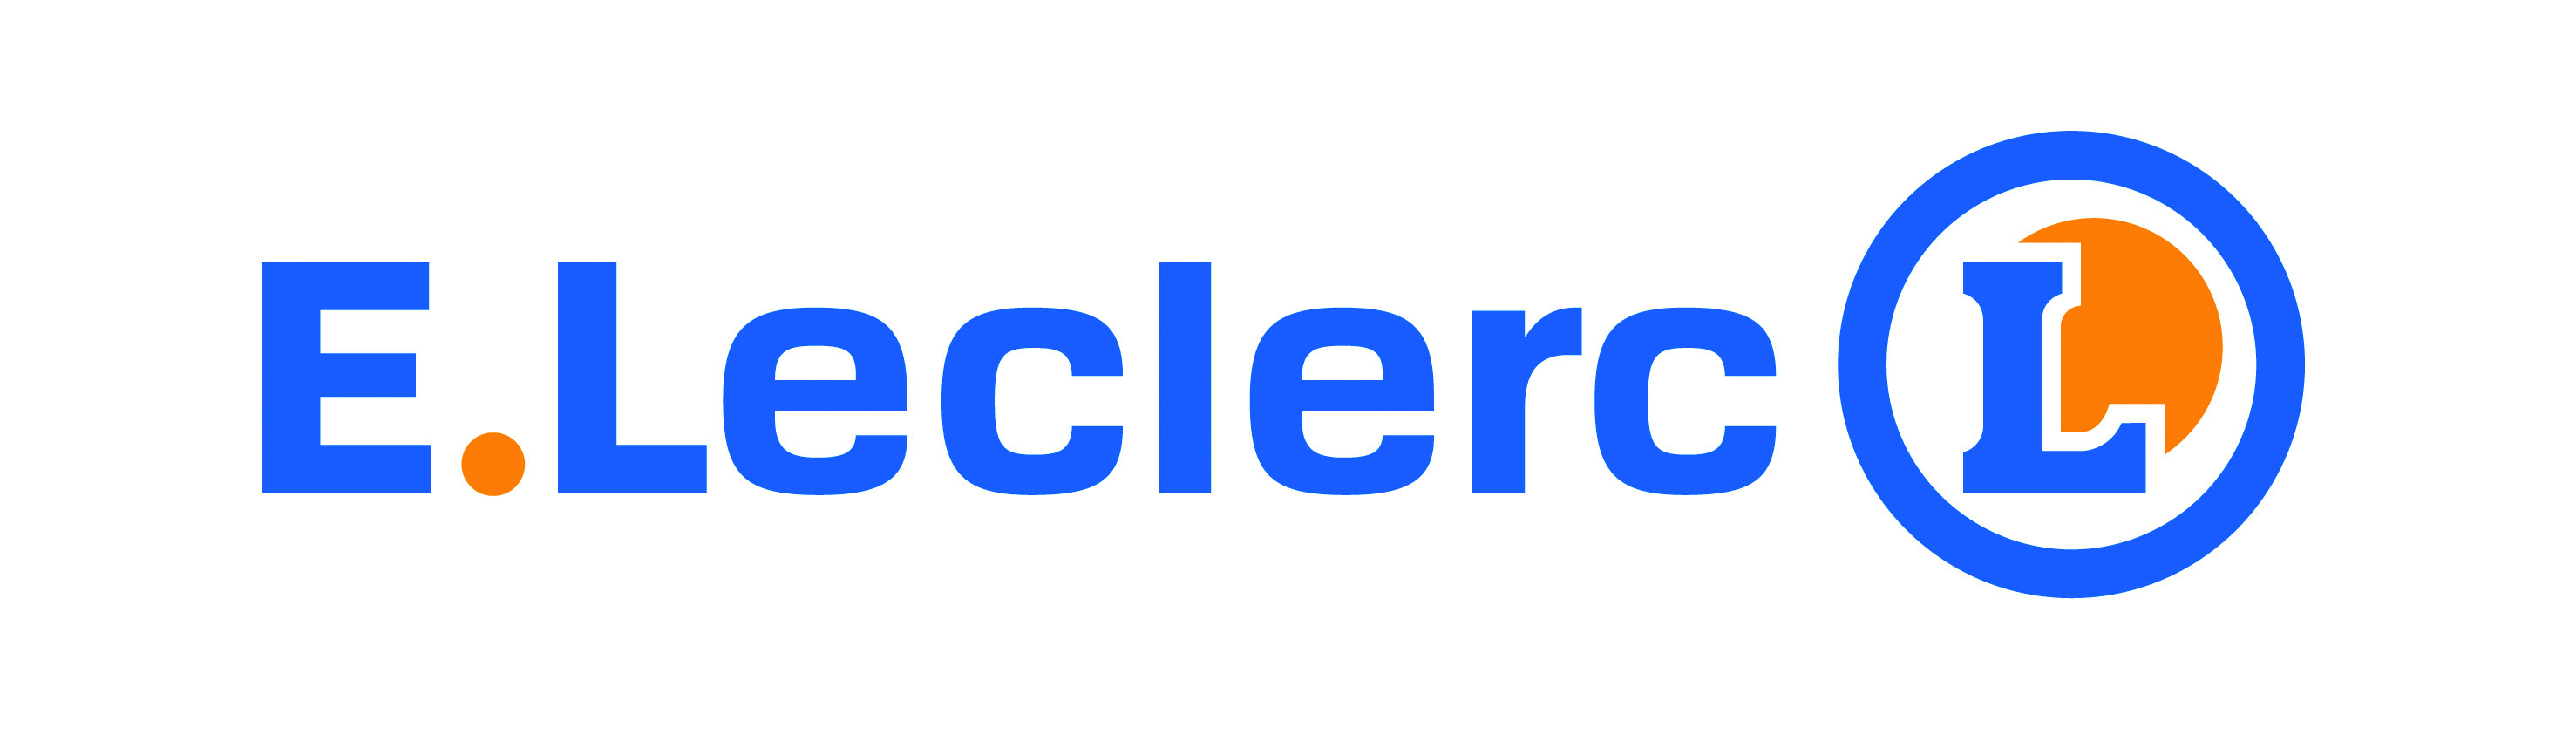 eleclerc logo coul rvb